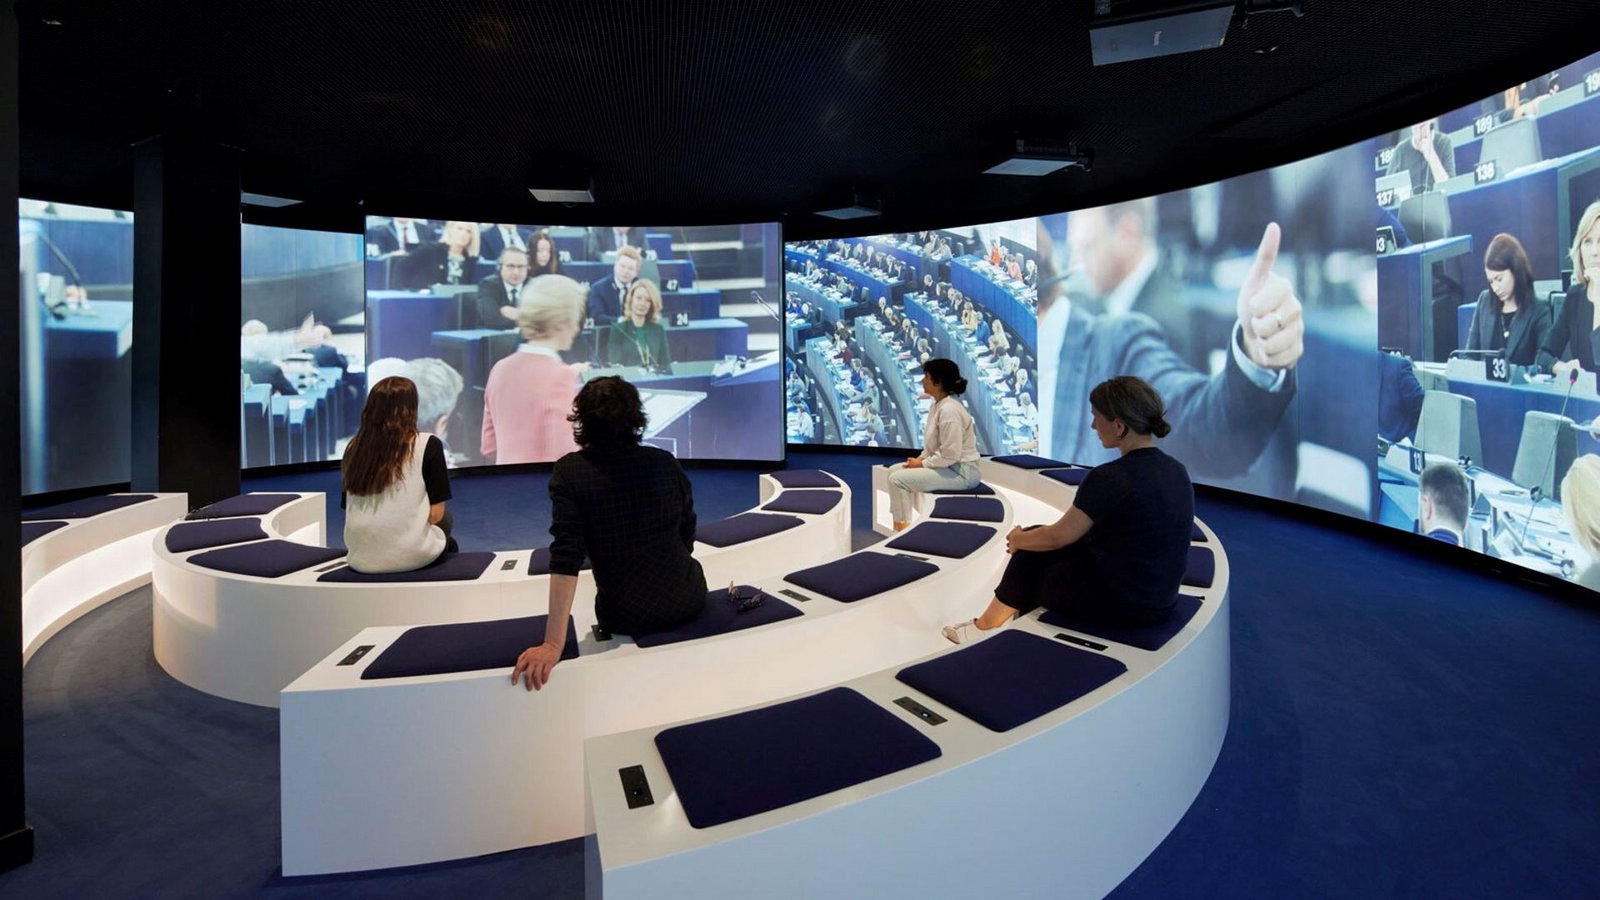 Europa ganz nah: das 360-Grad-Kino in der Ausstellung „Europa Expérience“.Foto: Michael Jungblut